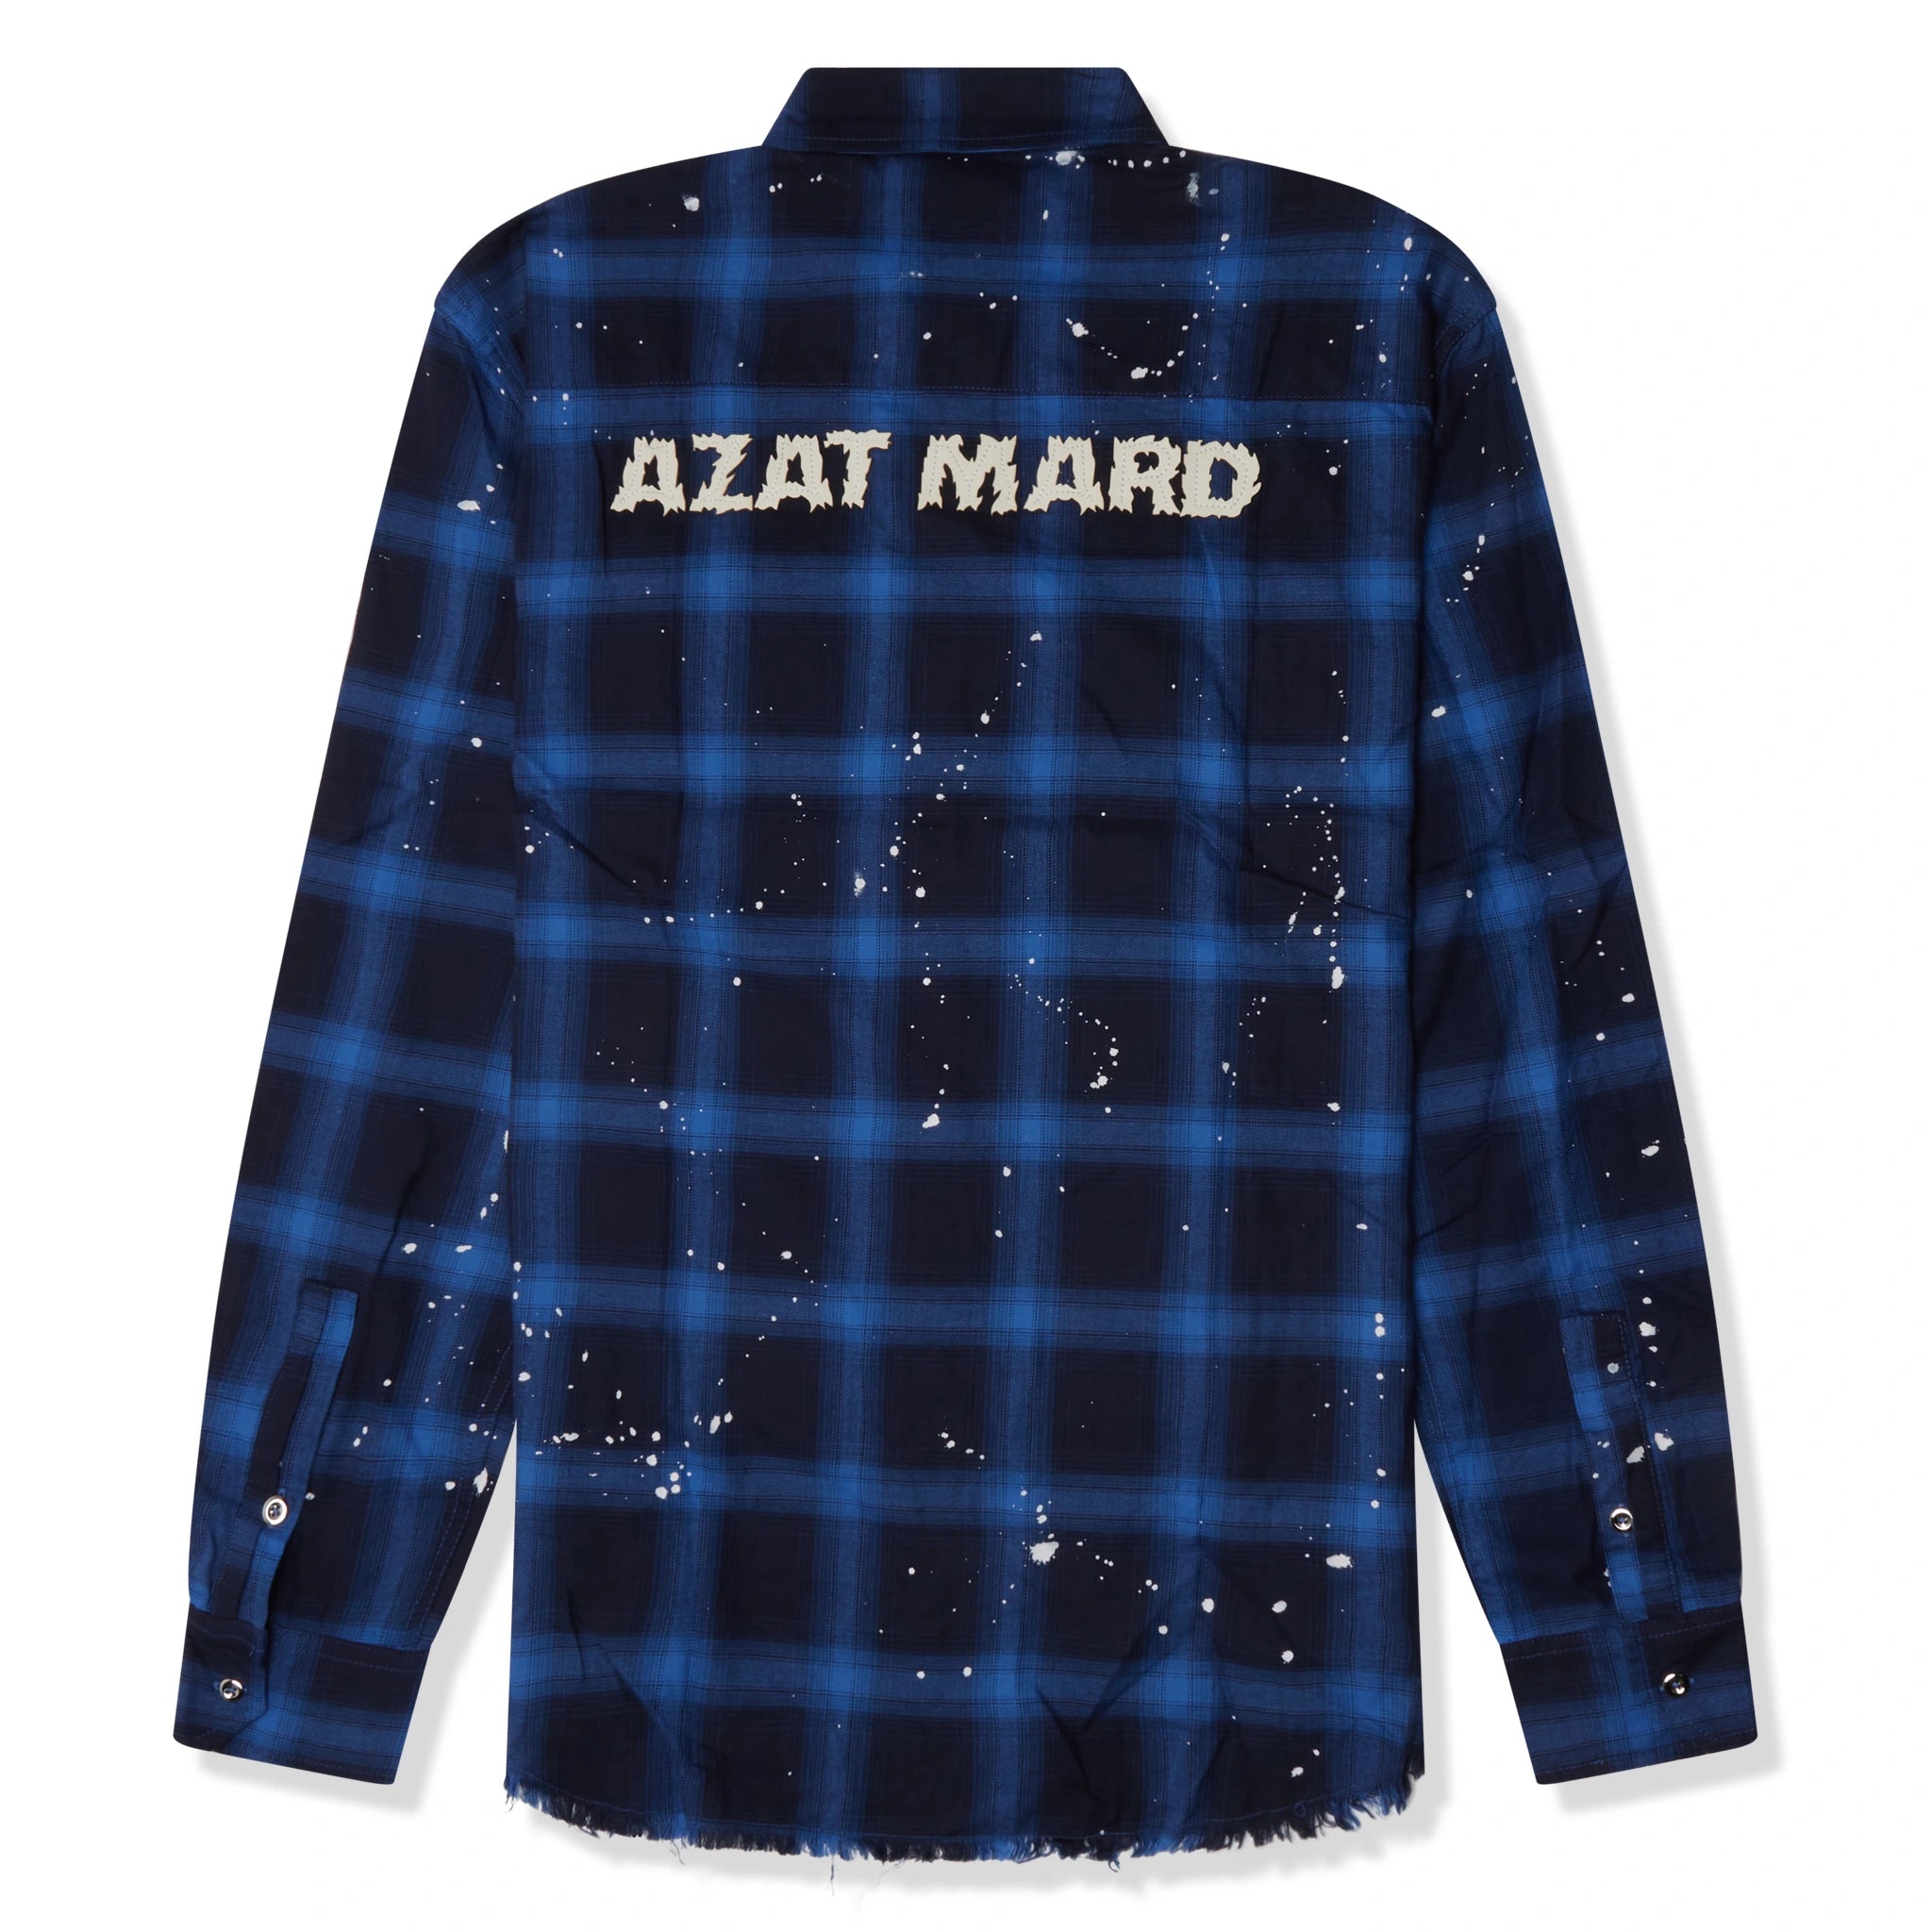 Back view of Azat Mard Blue Check Flannel Shirt